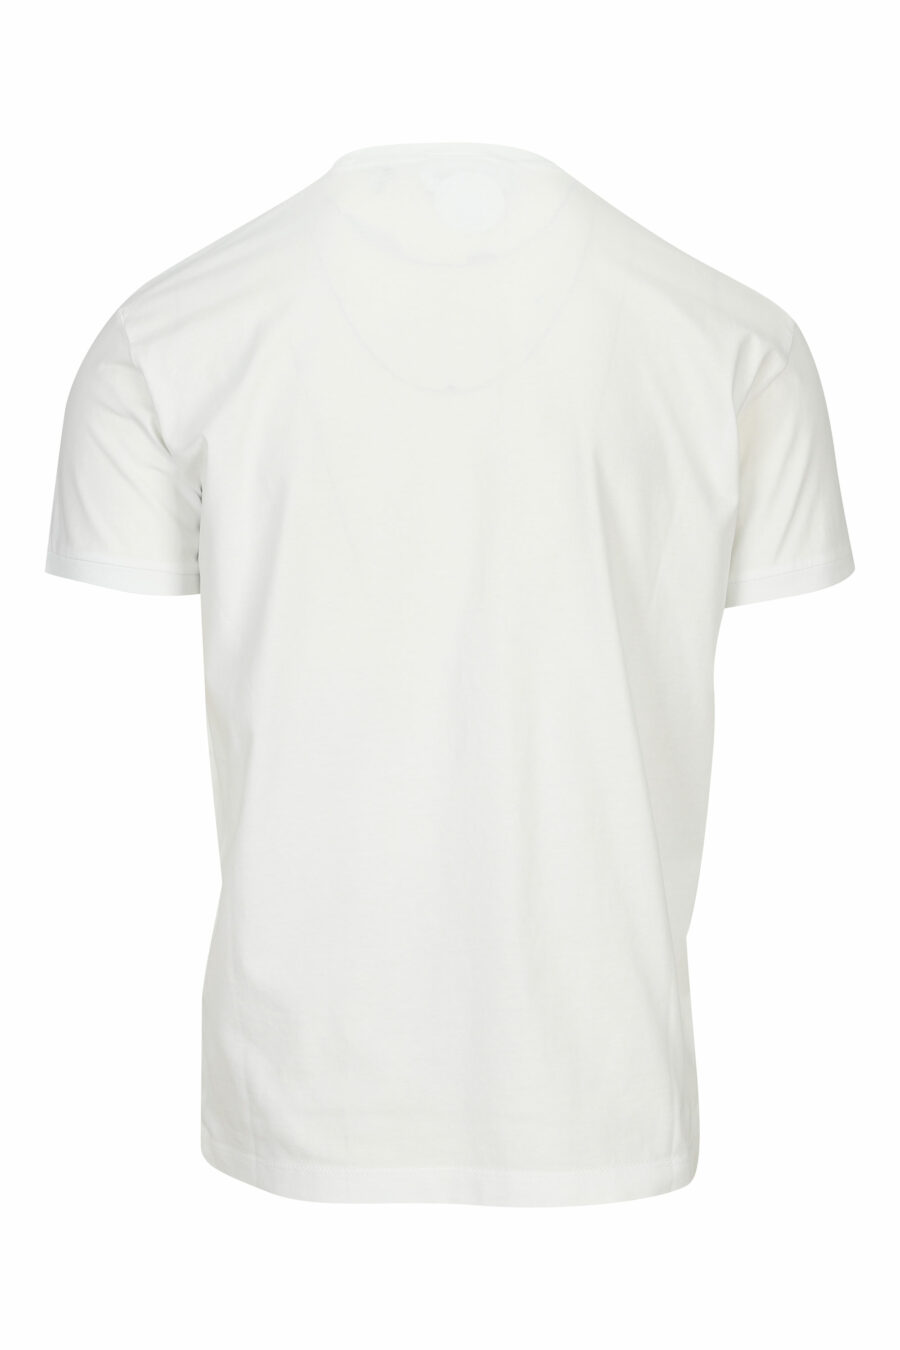 T-shirt blanc avec graffiti noir maxilogo - 8054148572037 1